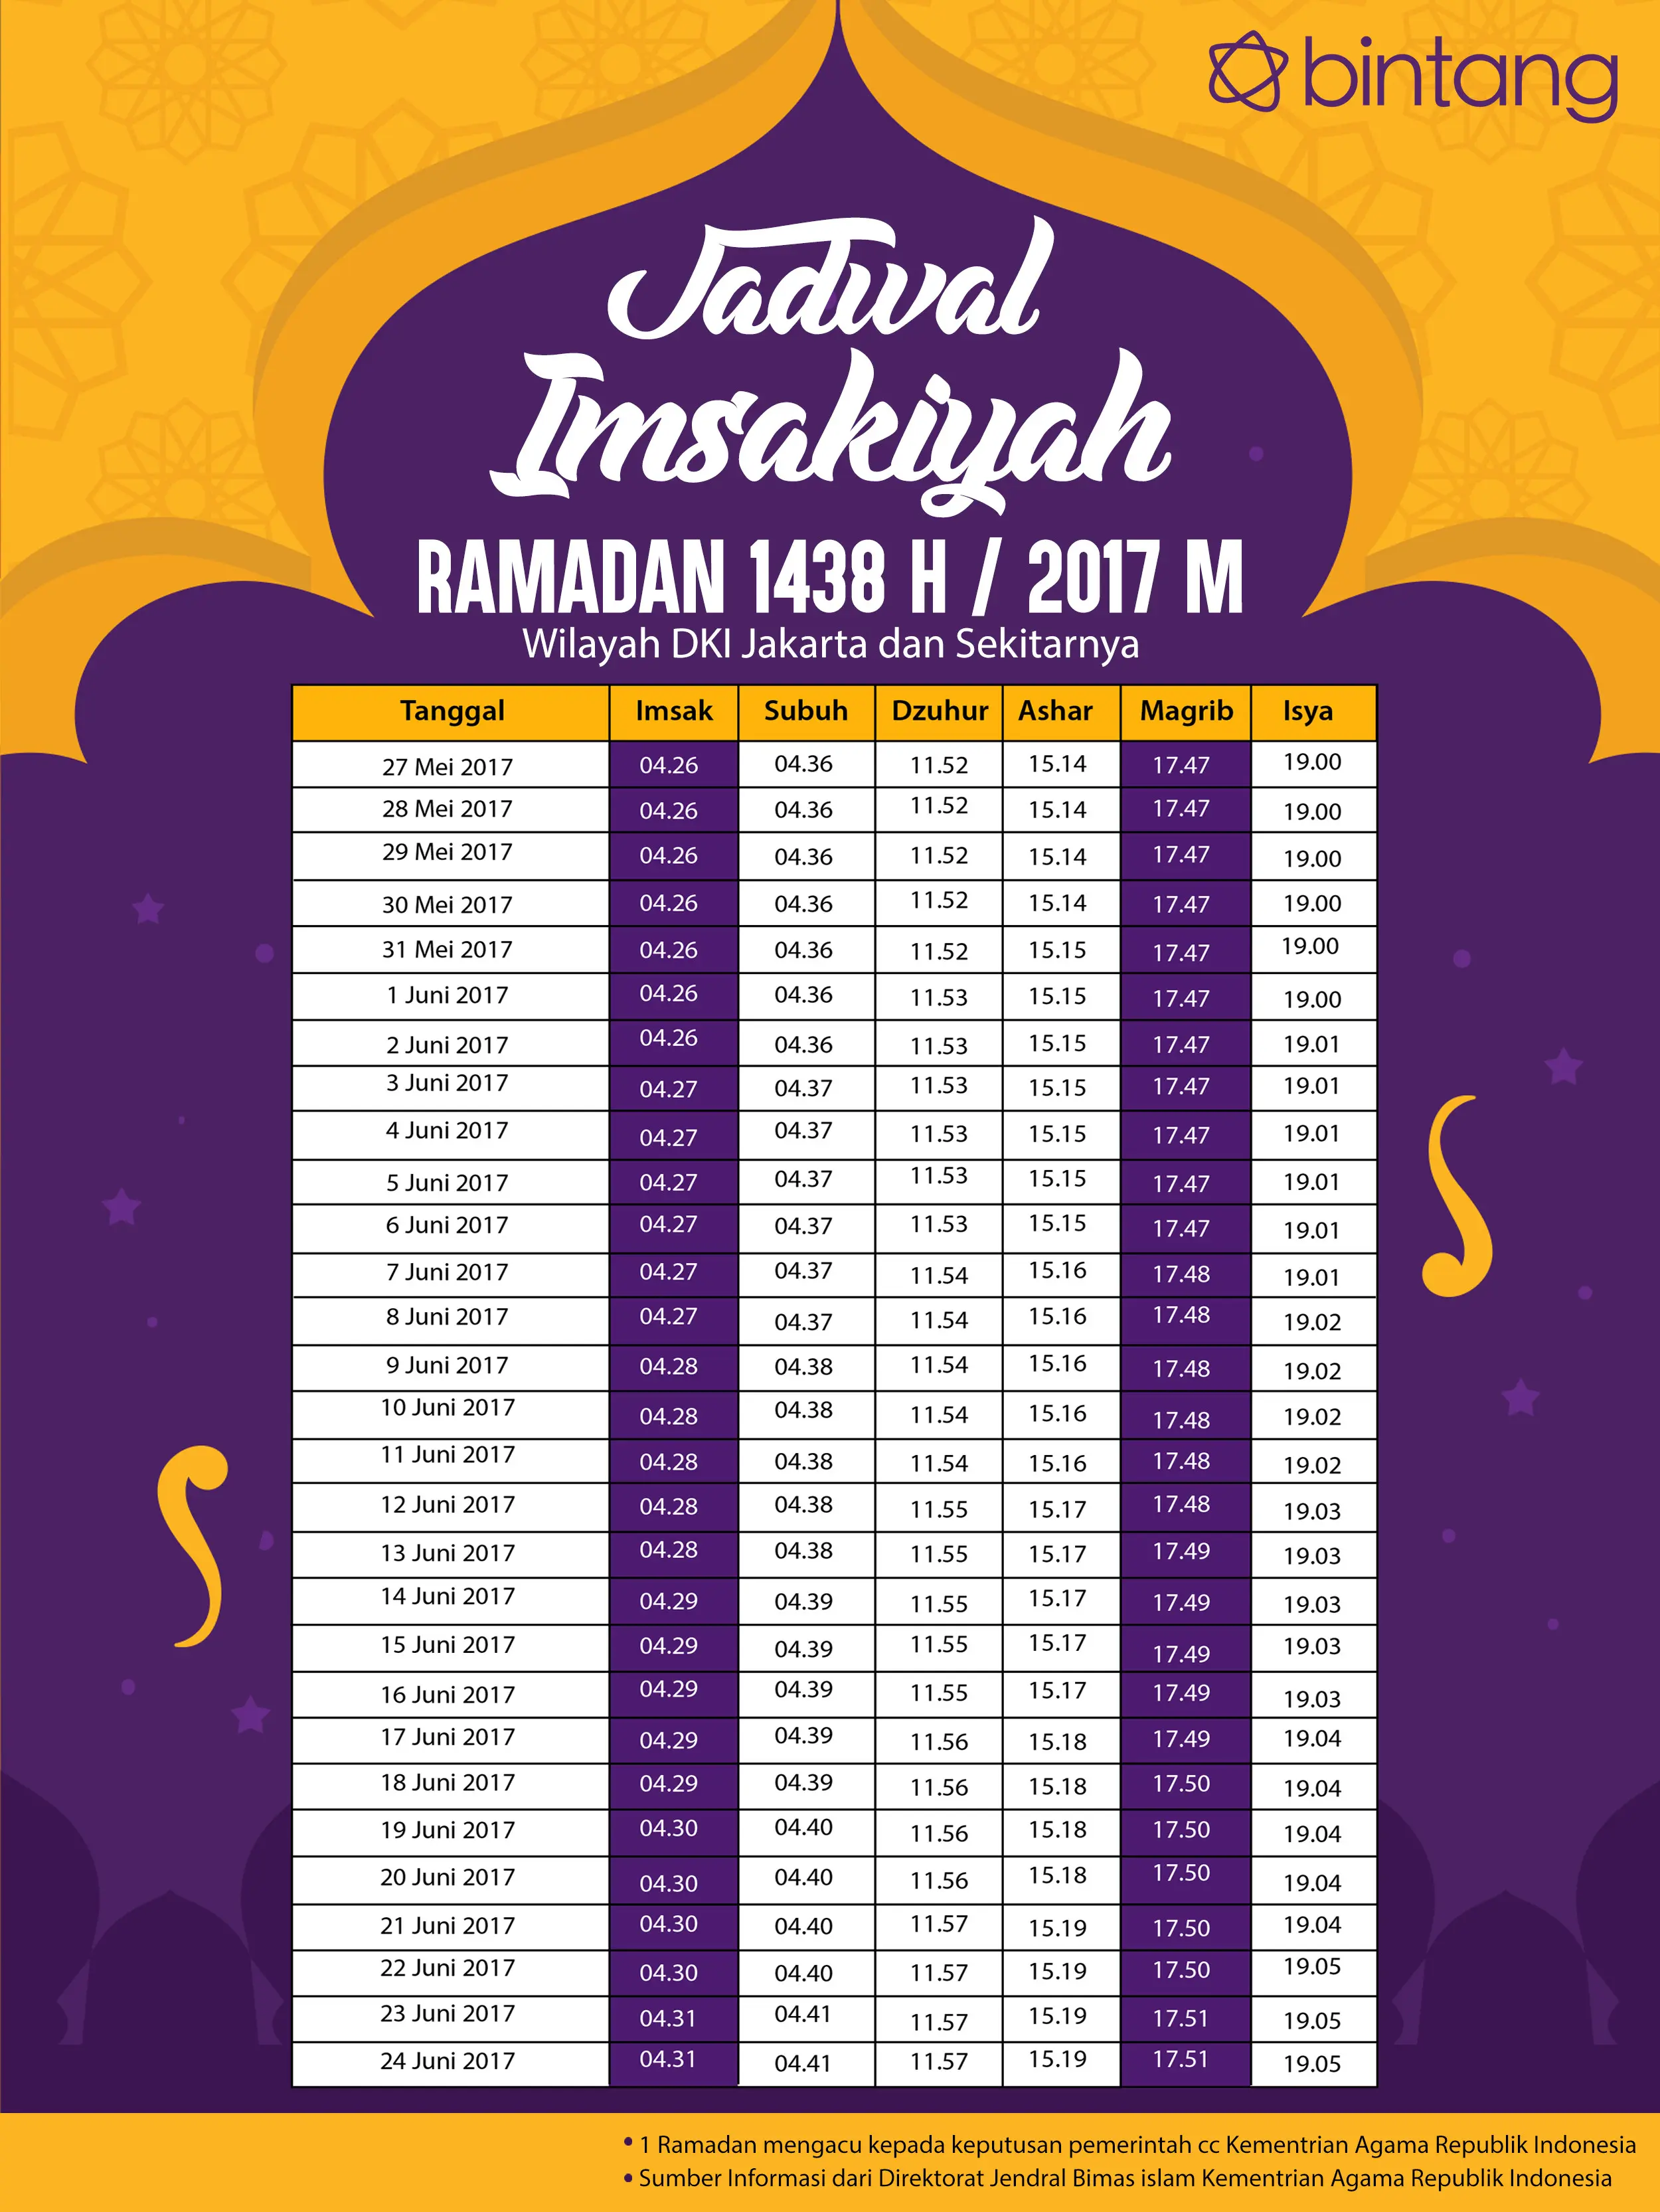 Jadwal Imsakiyah Ramadan 1438 H 2017. (Digital Imaging: Muhammad Iqbal Nurfajri/Bintang.com).